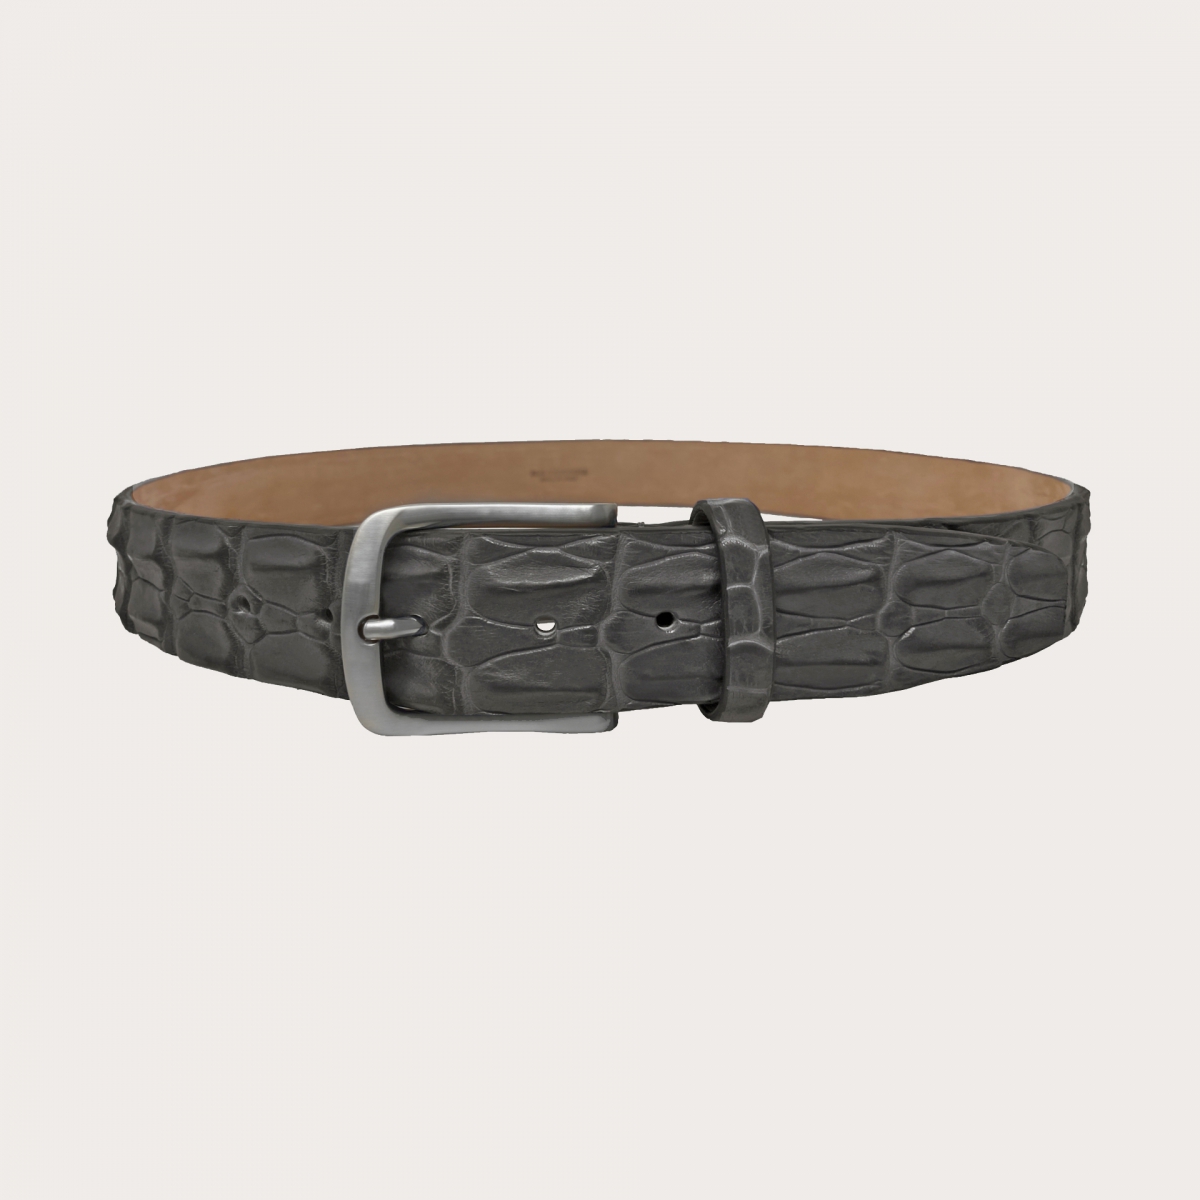 BRUCLE Sports belt in genuine crocodile leather nickel free, lead grey